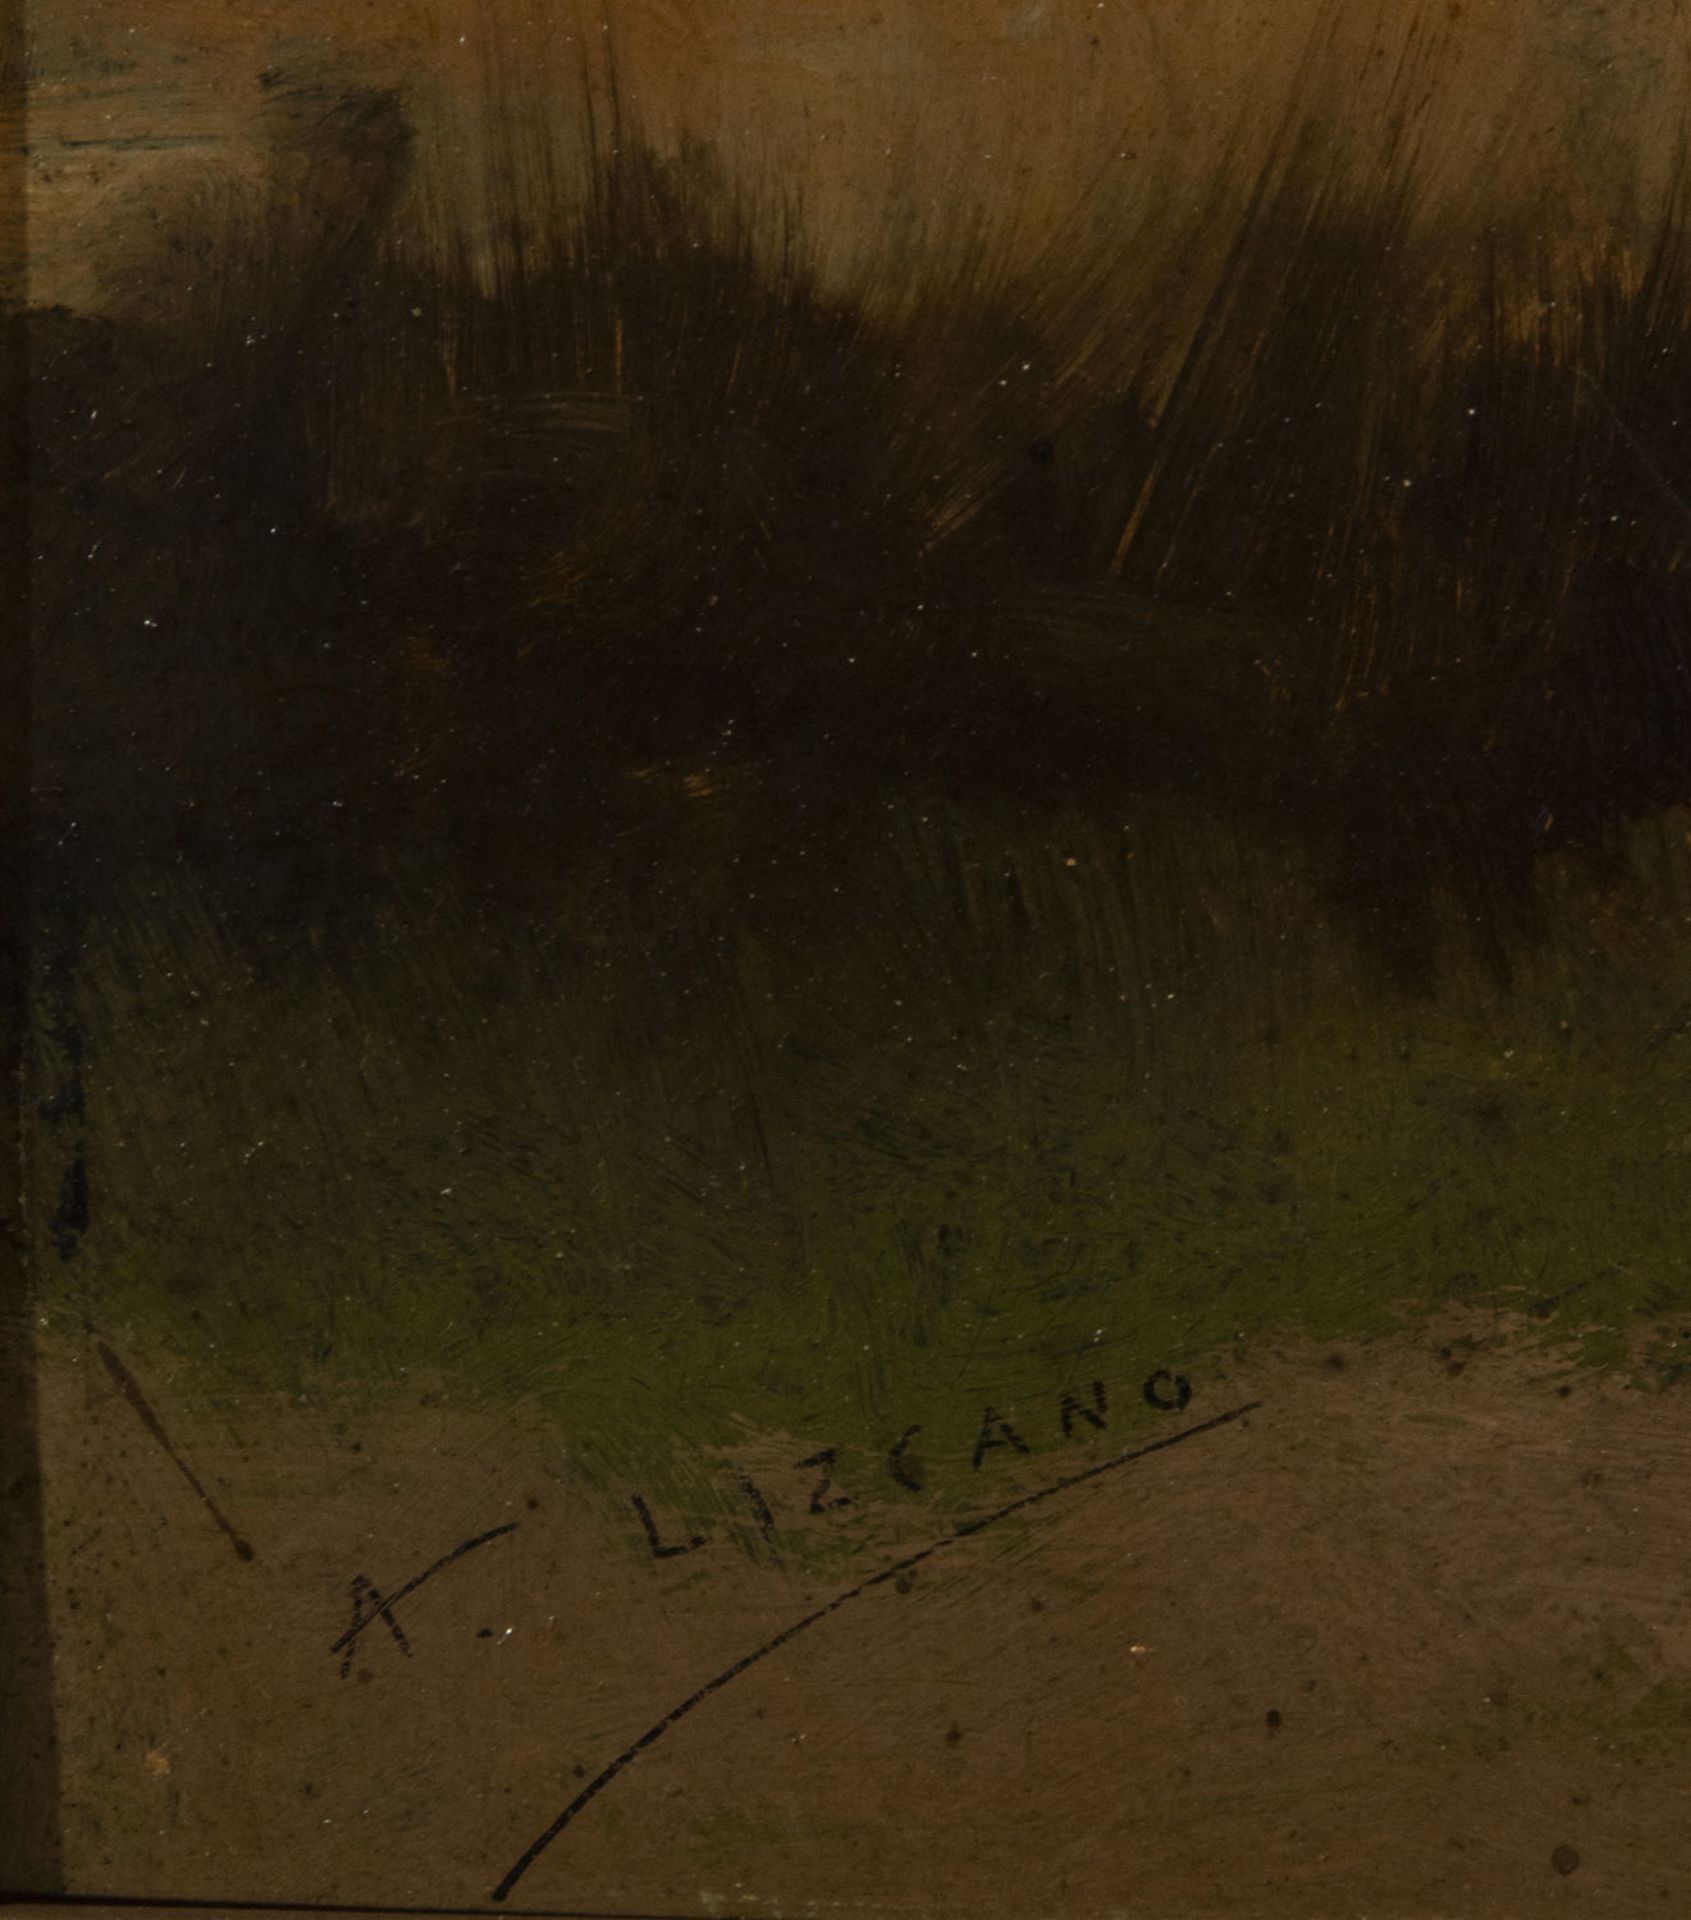 Ángel Lizcano Monedero (Alcázar de San Juan, November 24, 1846-Leganés, July 31, 1929) - Bild 2 aus 3